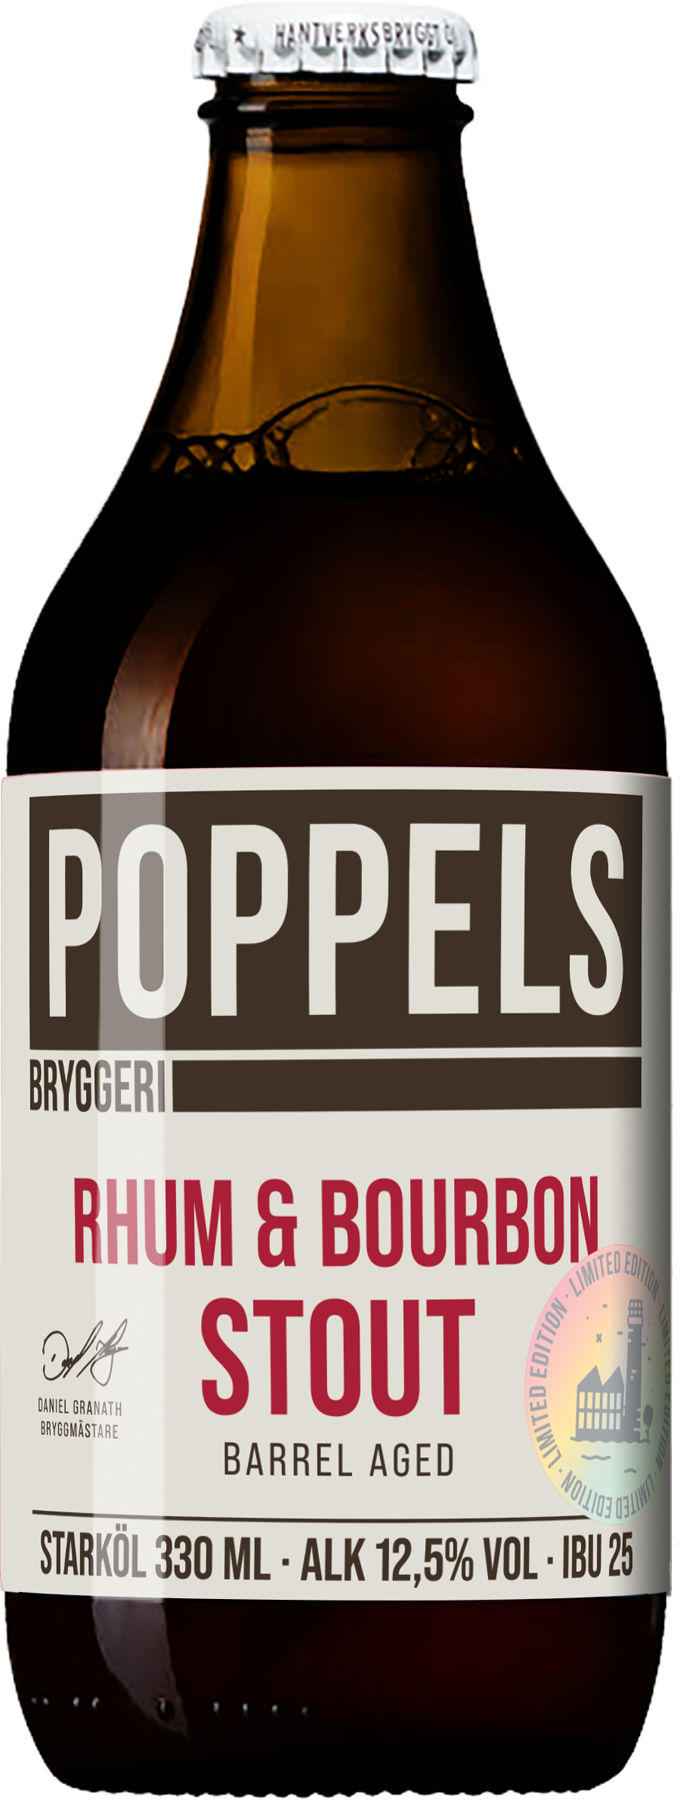 Rhum & Bourbon Stout